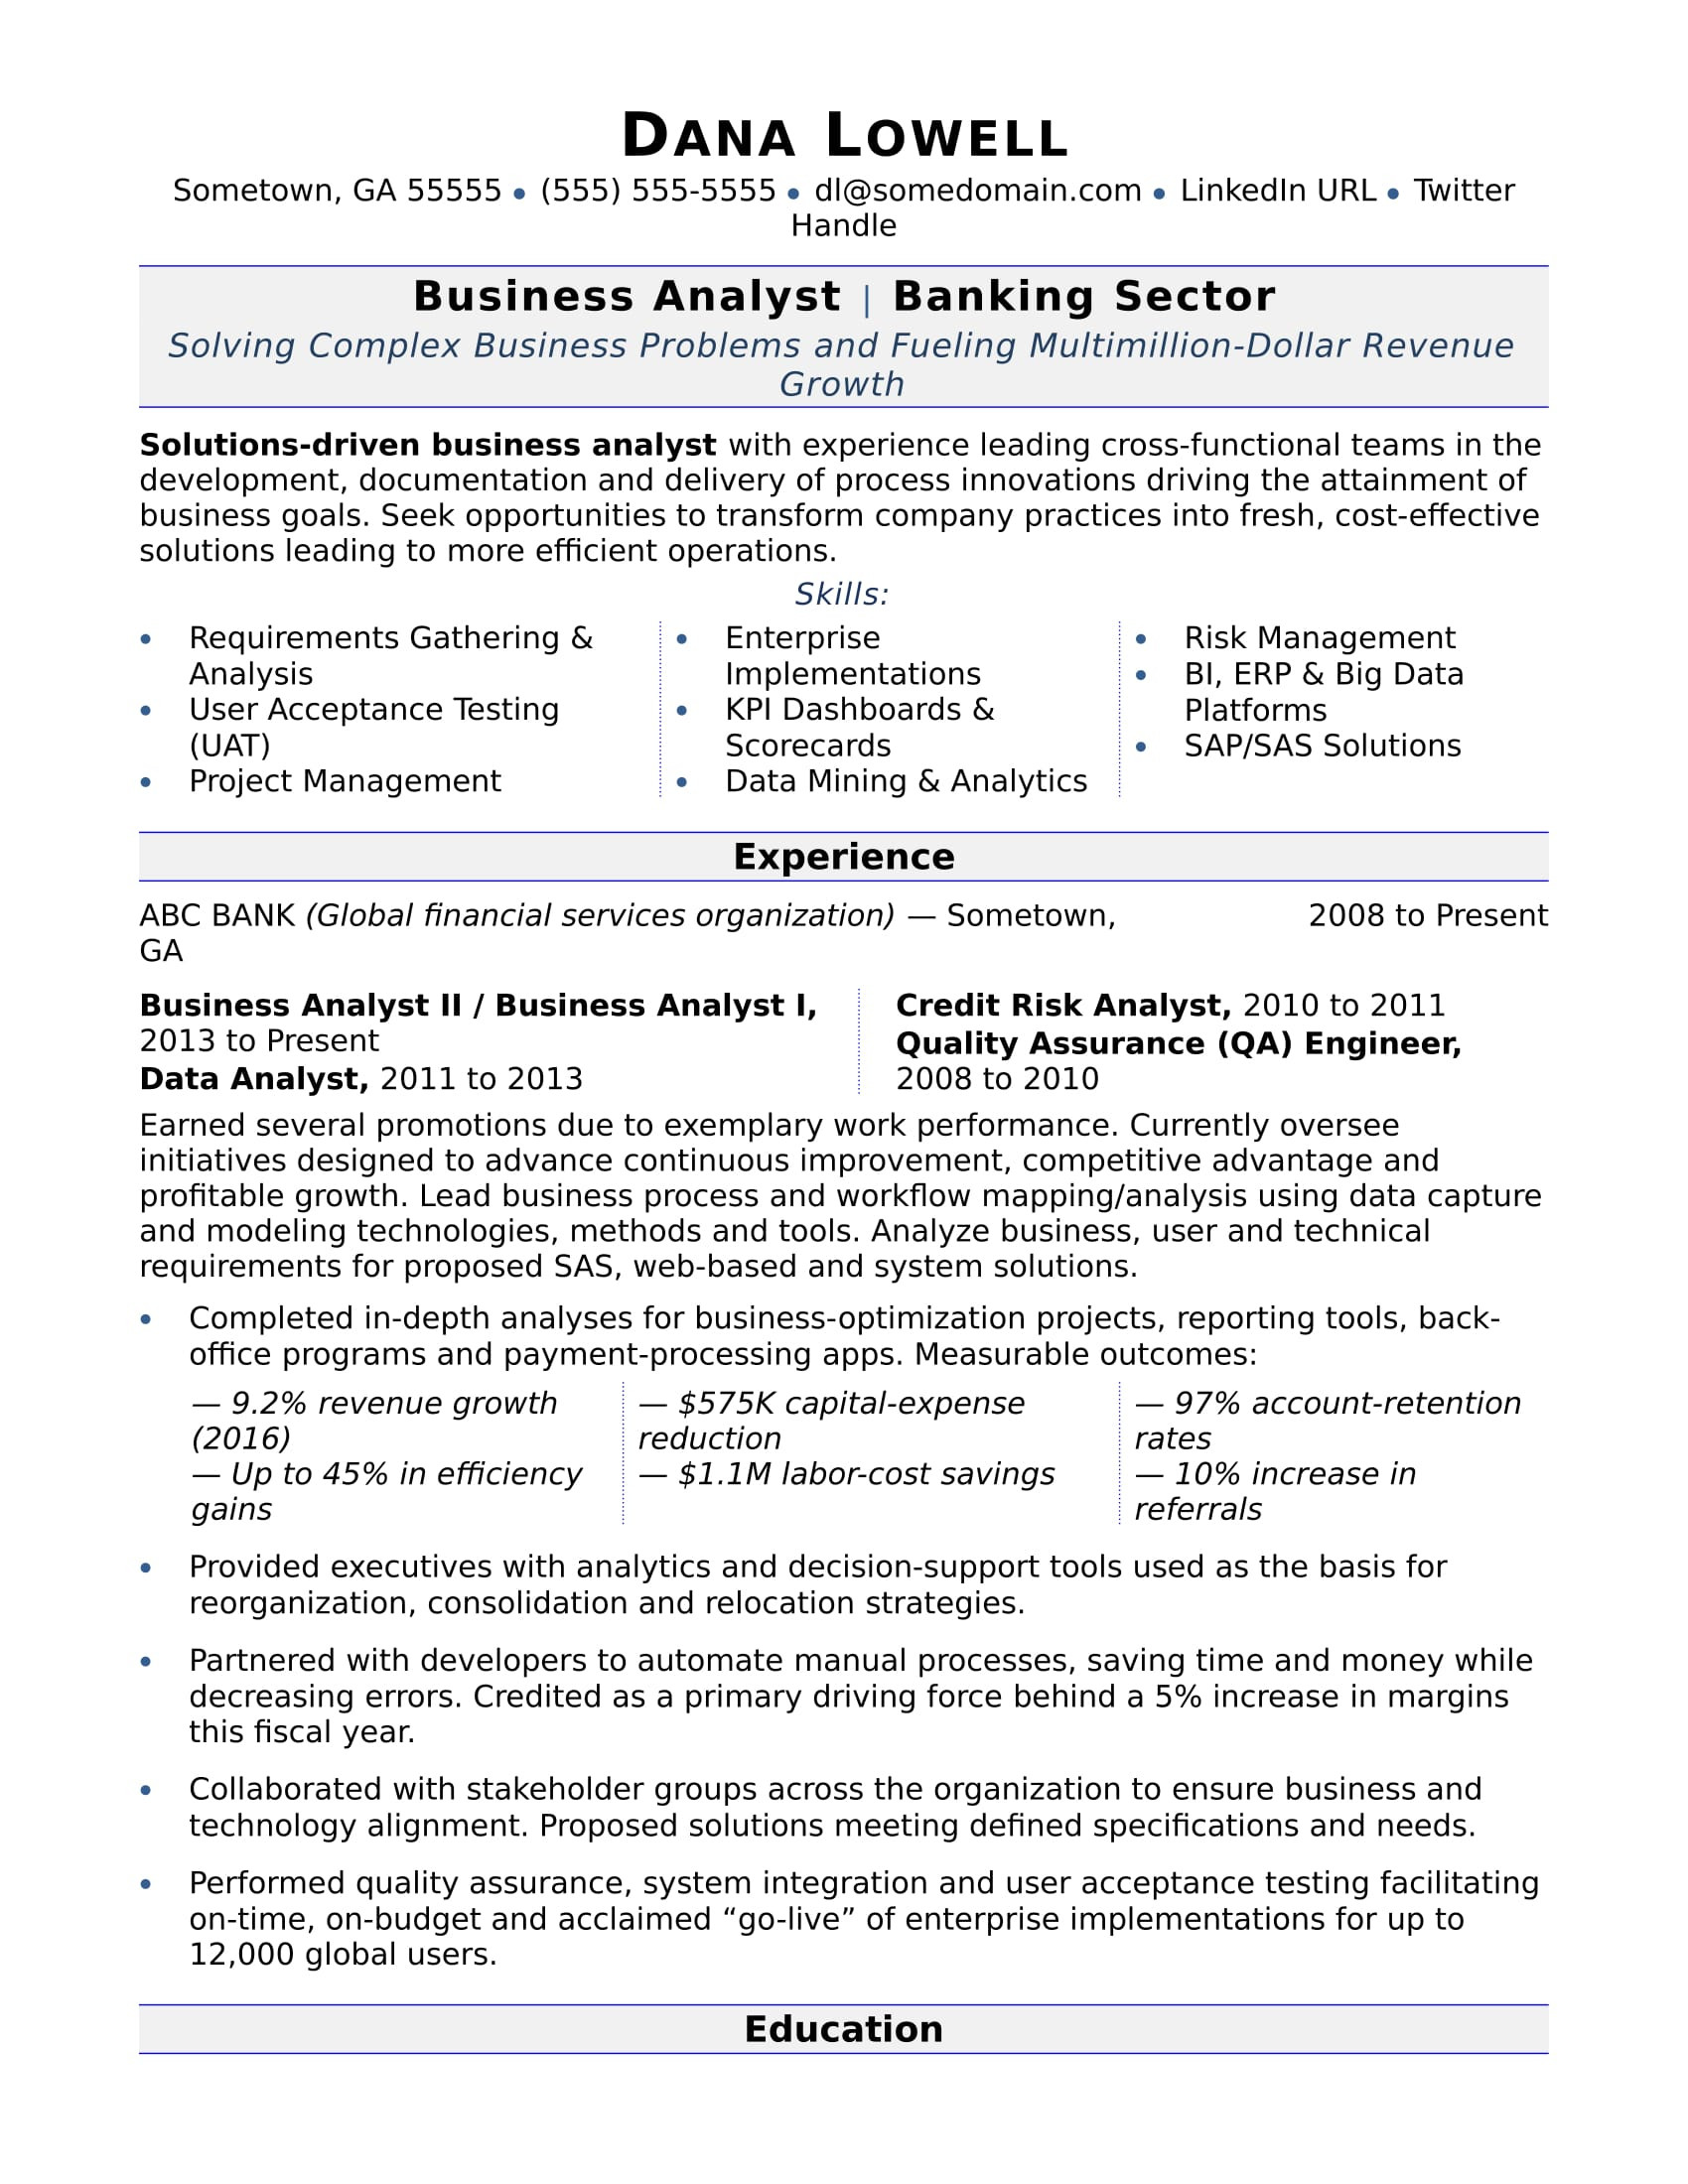 Senior Business System Analyst Resume Sample Business Analyst Resume Monster.com